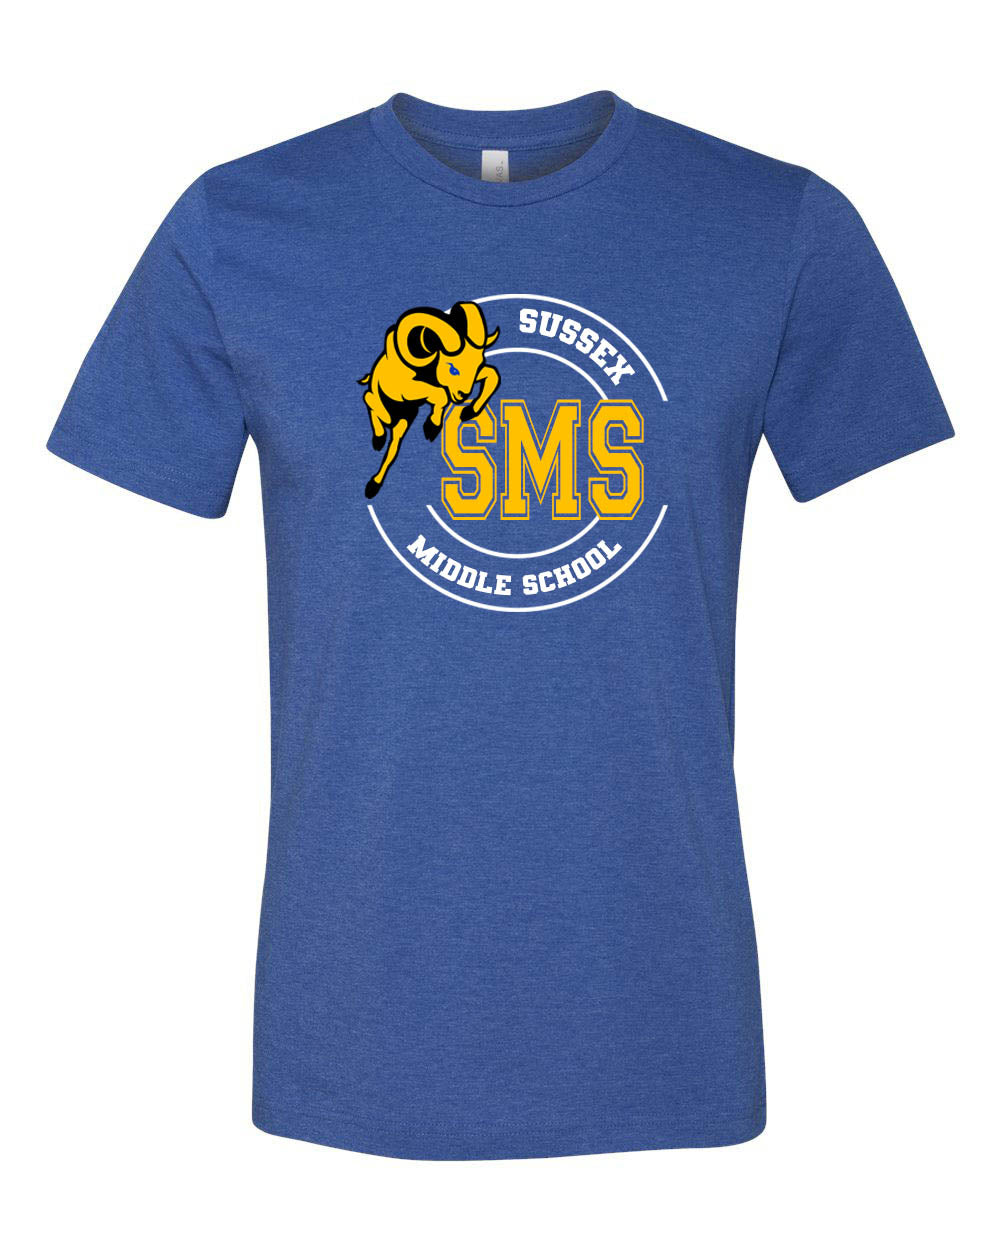 Sussex Middle School design 5 t-Shirt